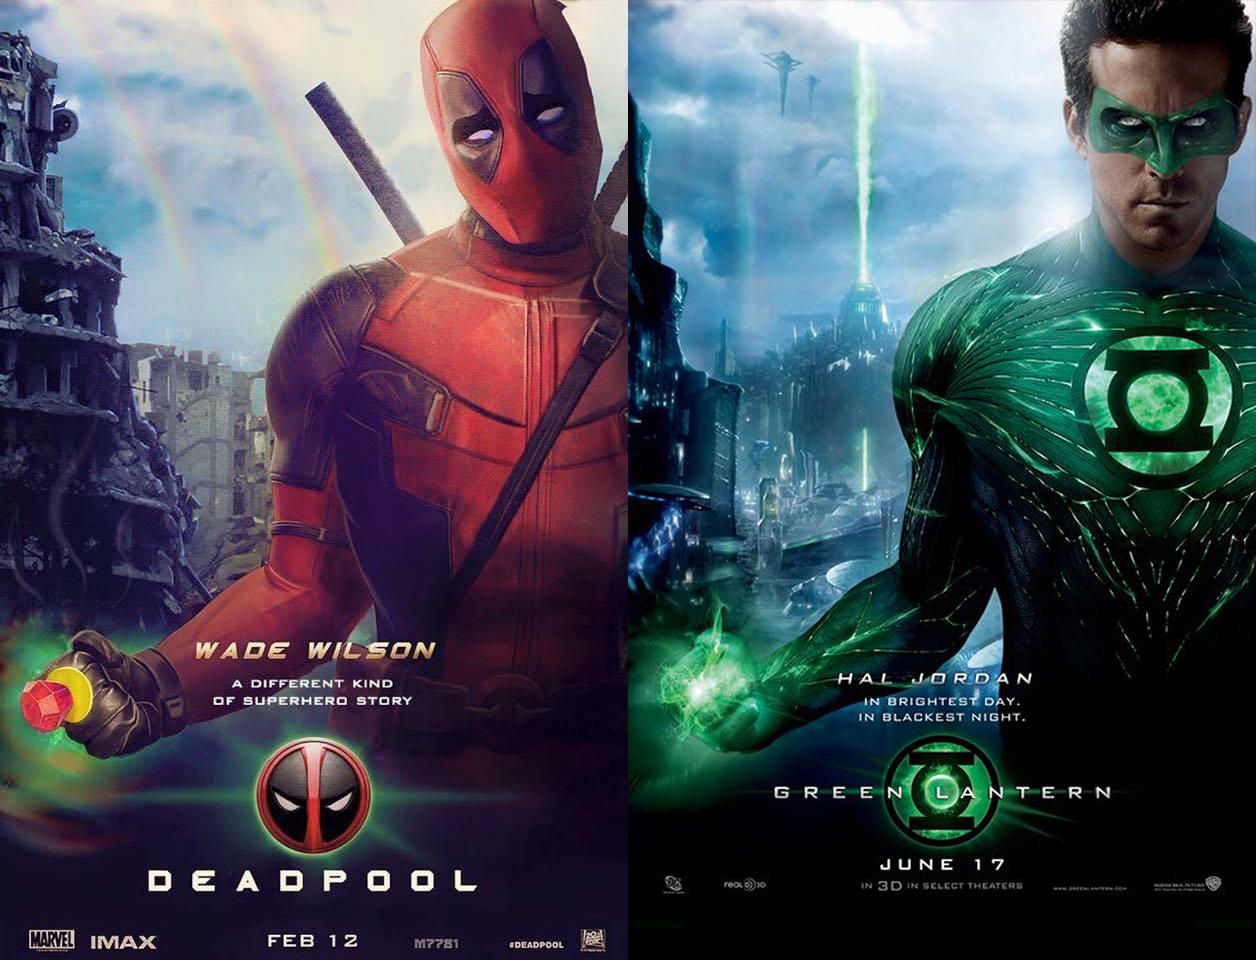 Deadpool x Green lantern movie poster by m7781. Deadpool / Wade